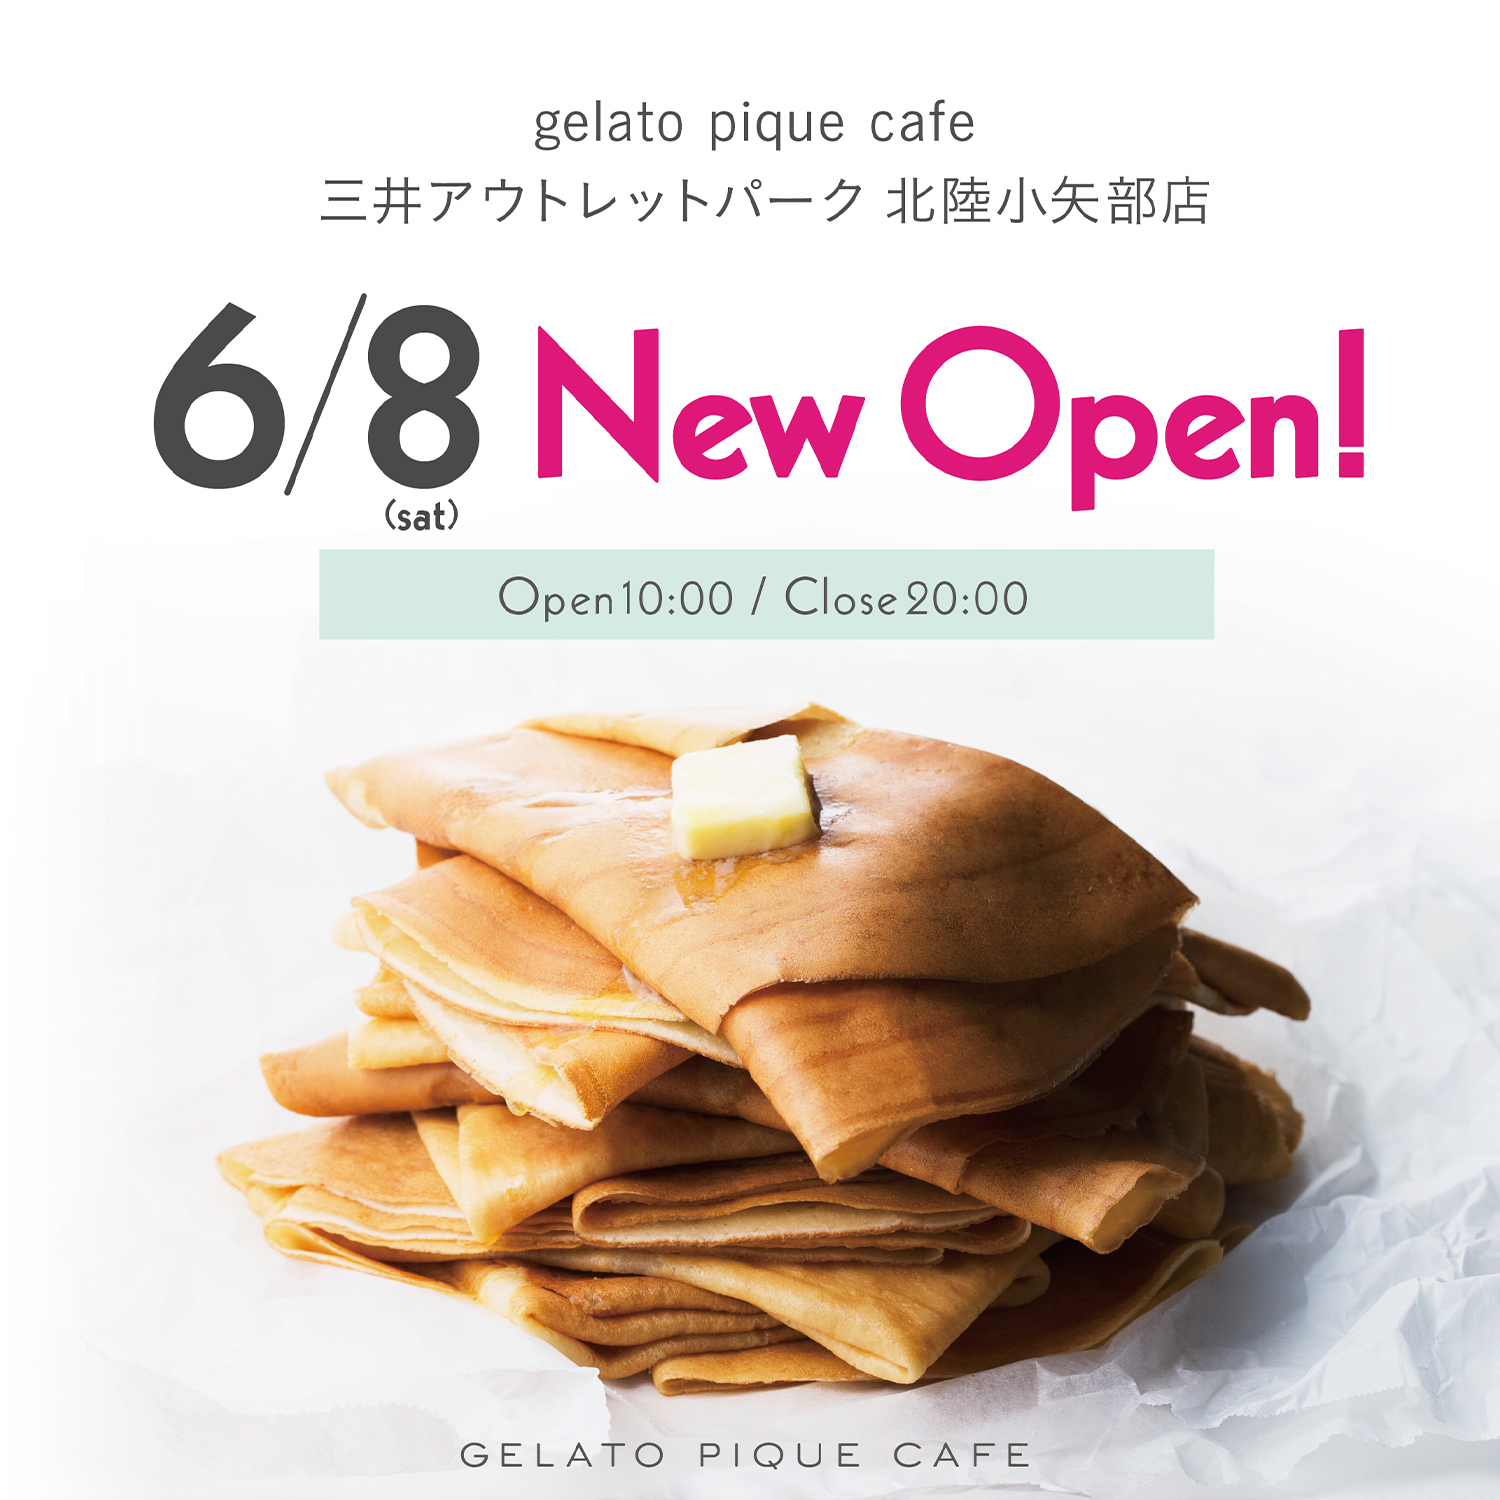 gelato pique cafe 富山・三井アウトレットパーク 北陸小矢部店